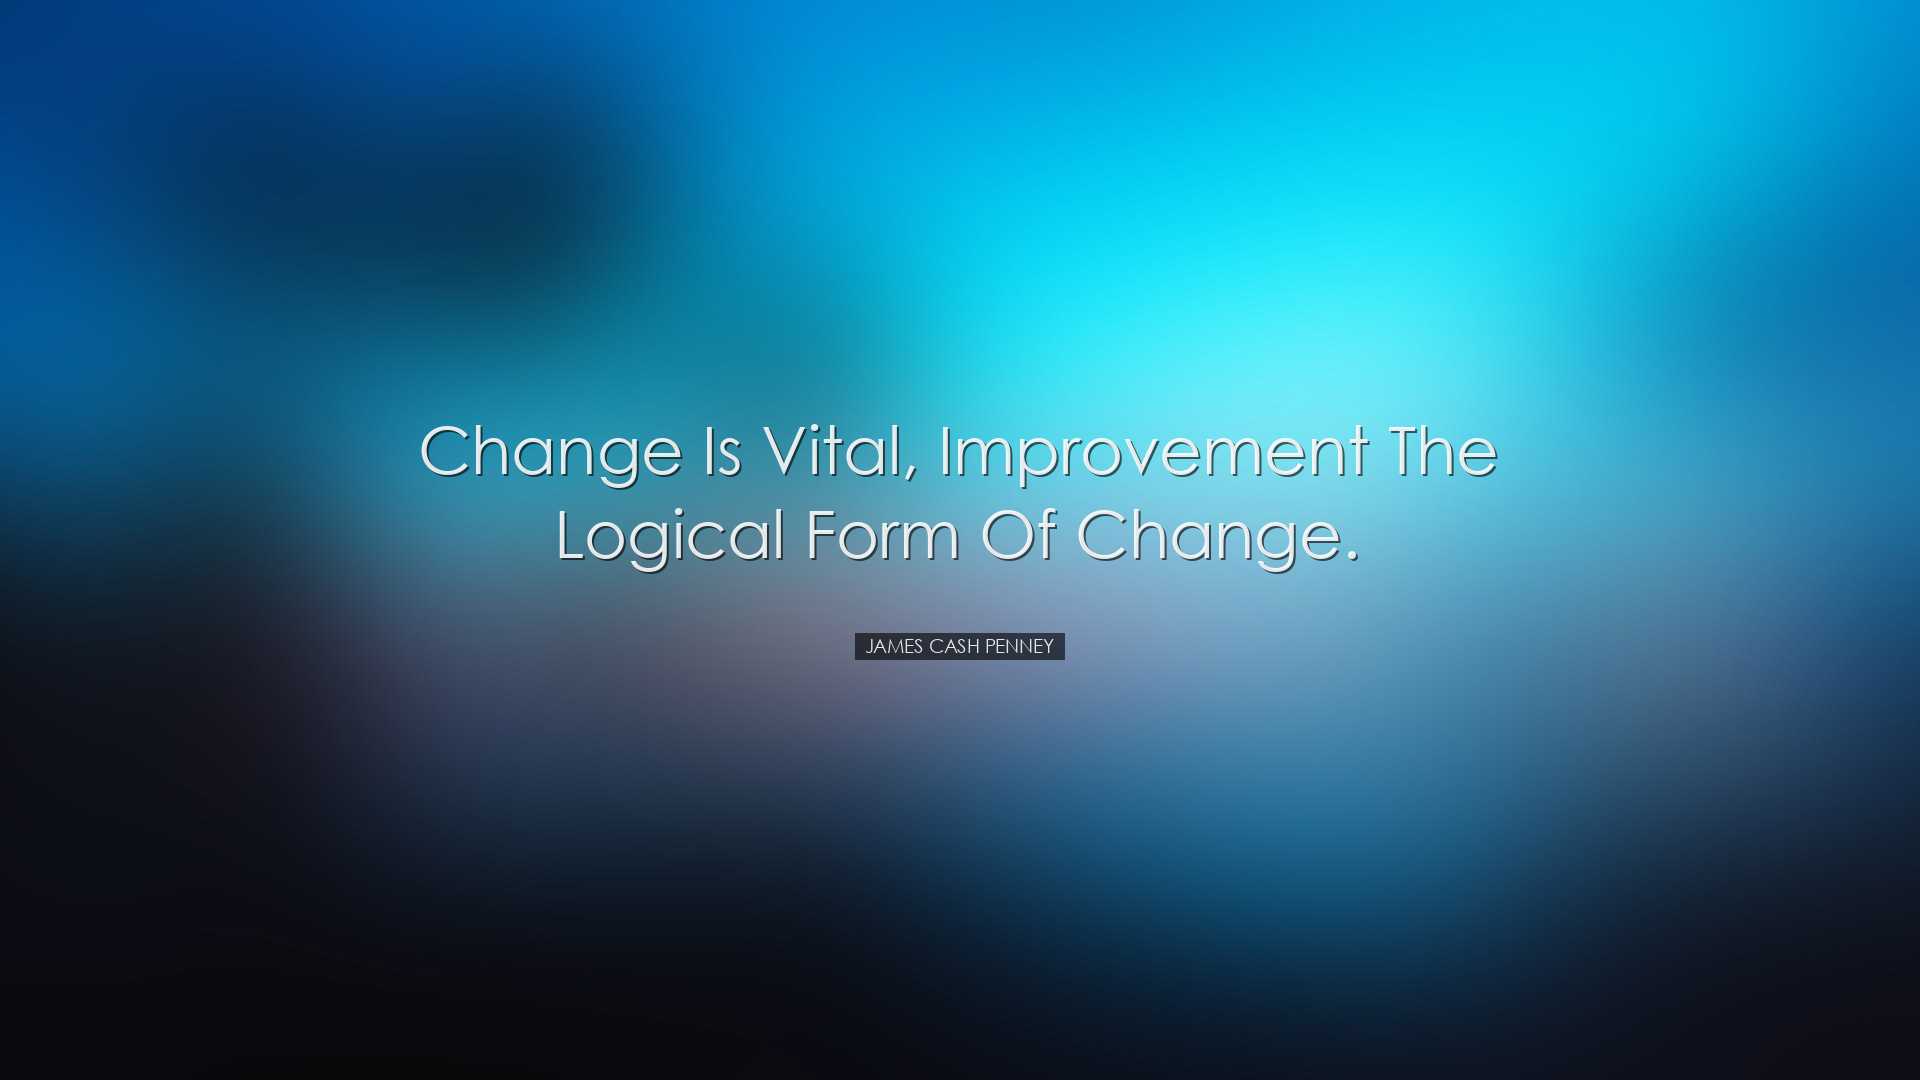 Change is vital, improvement the logical form of change. - James C